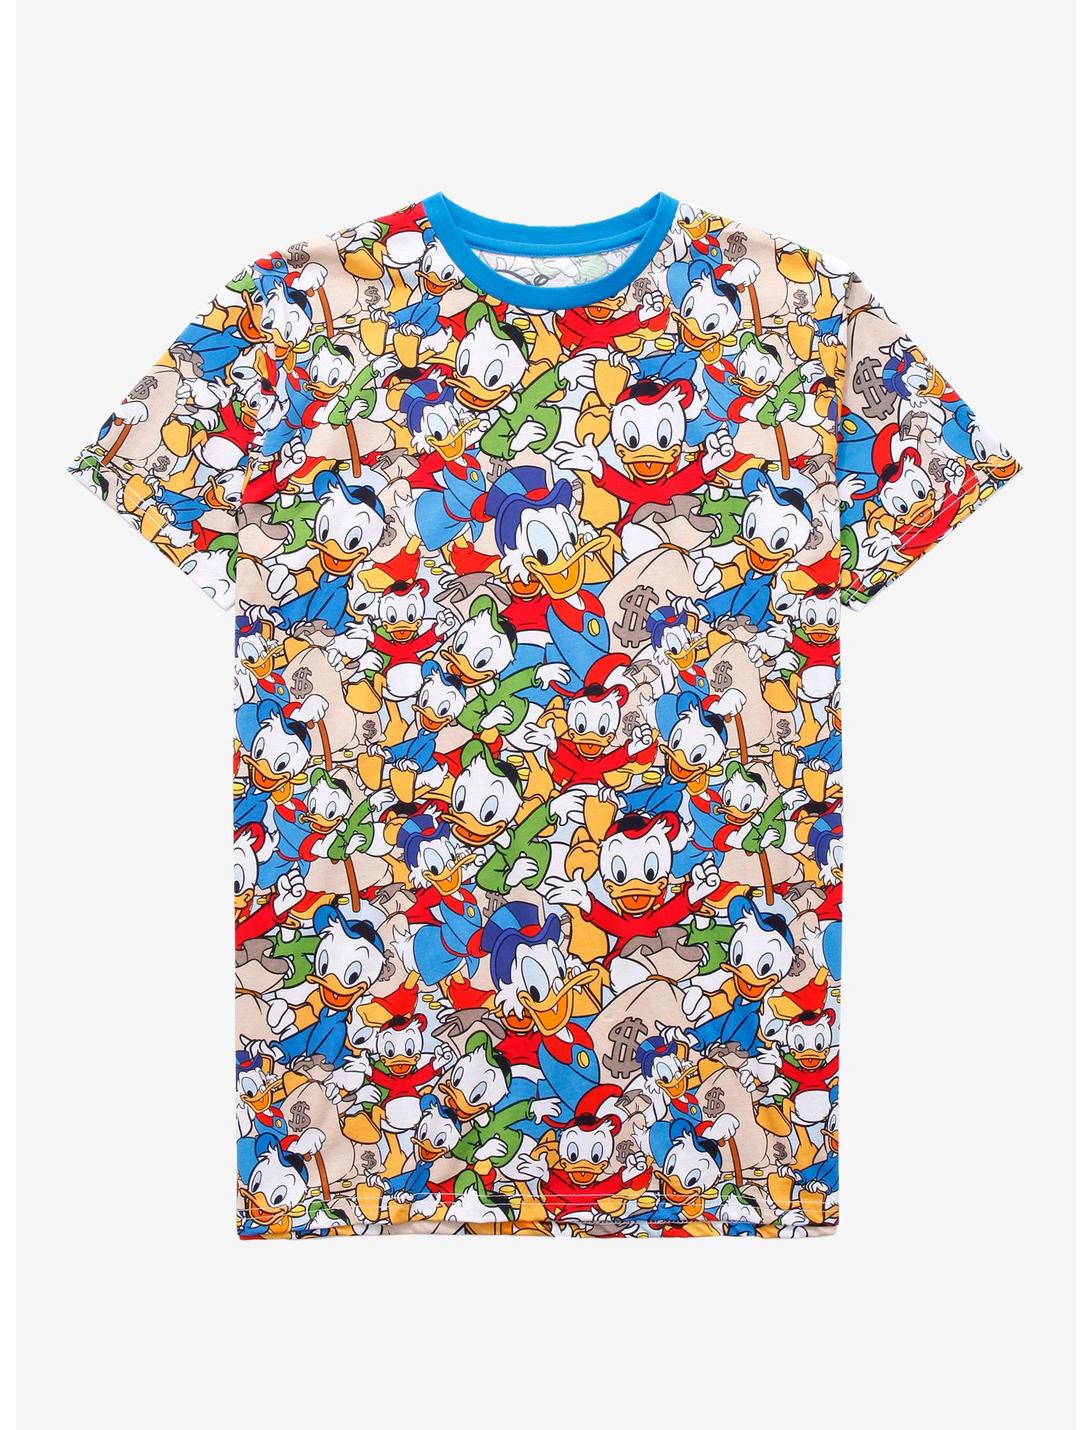 Cakeworthy Disney DuckTales Allover Print Women's T-Shirt - BoxLunch Exclusive, MULTI, hi-res